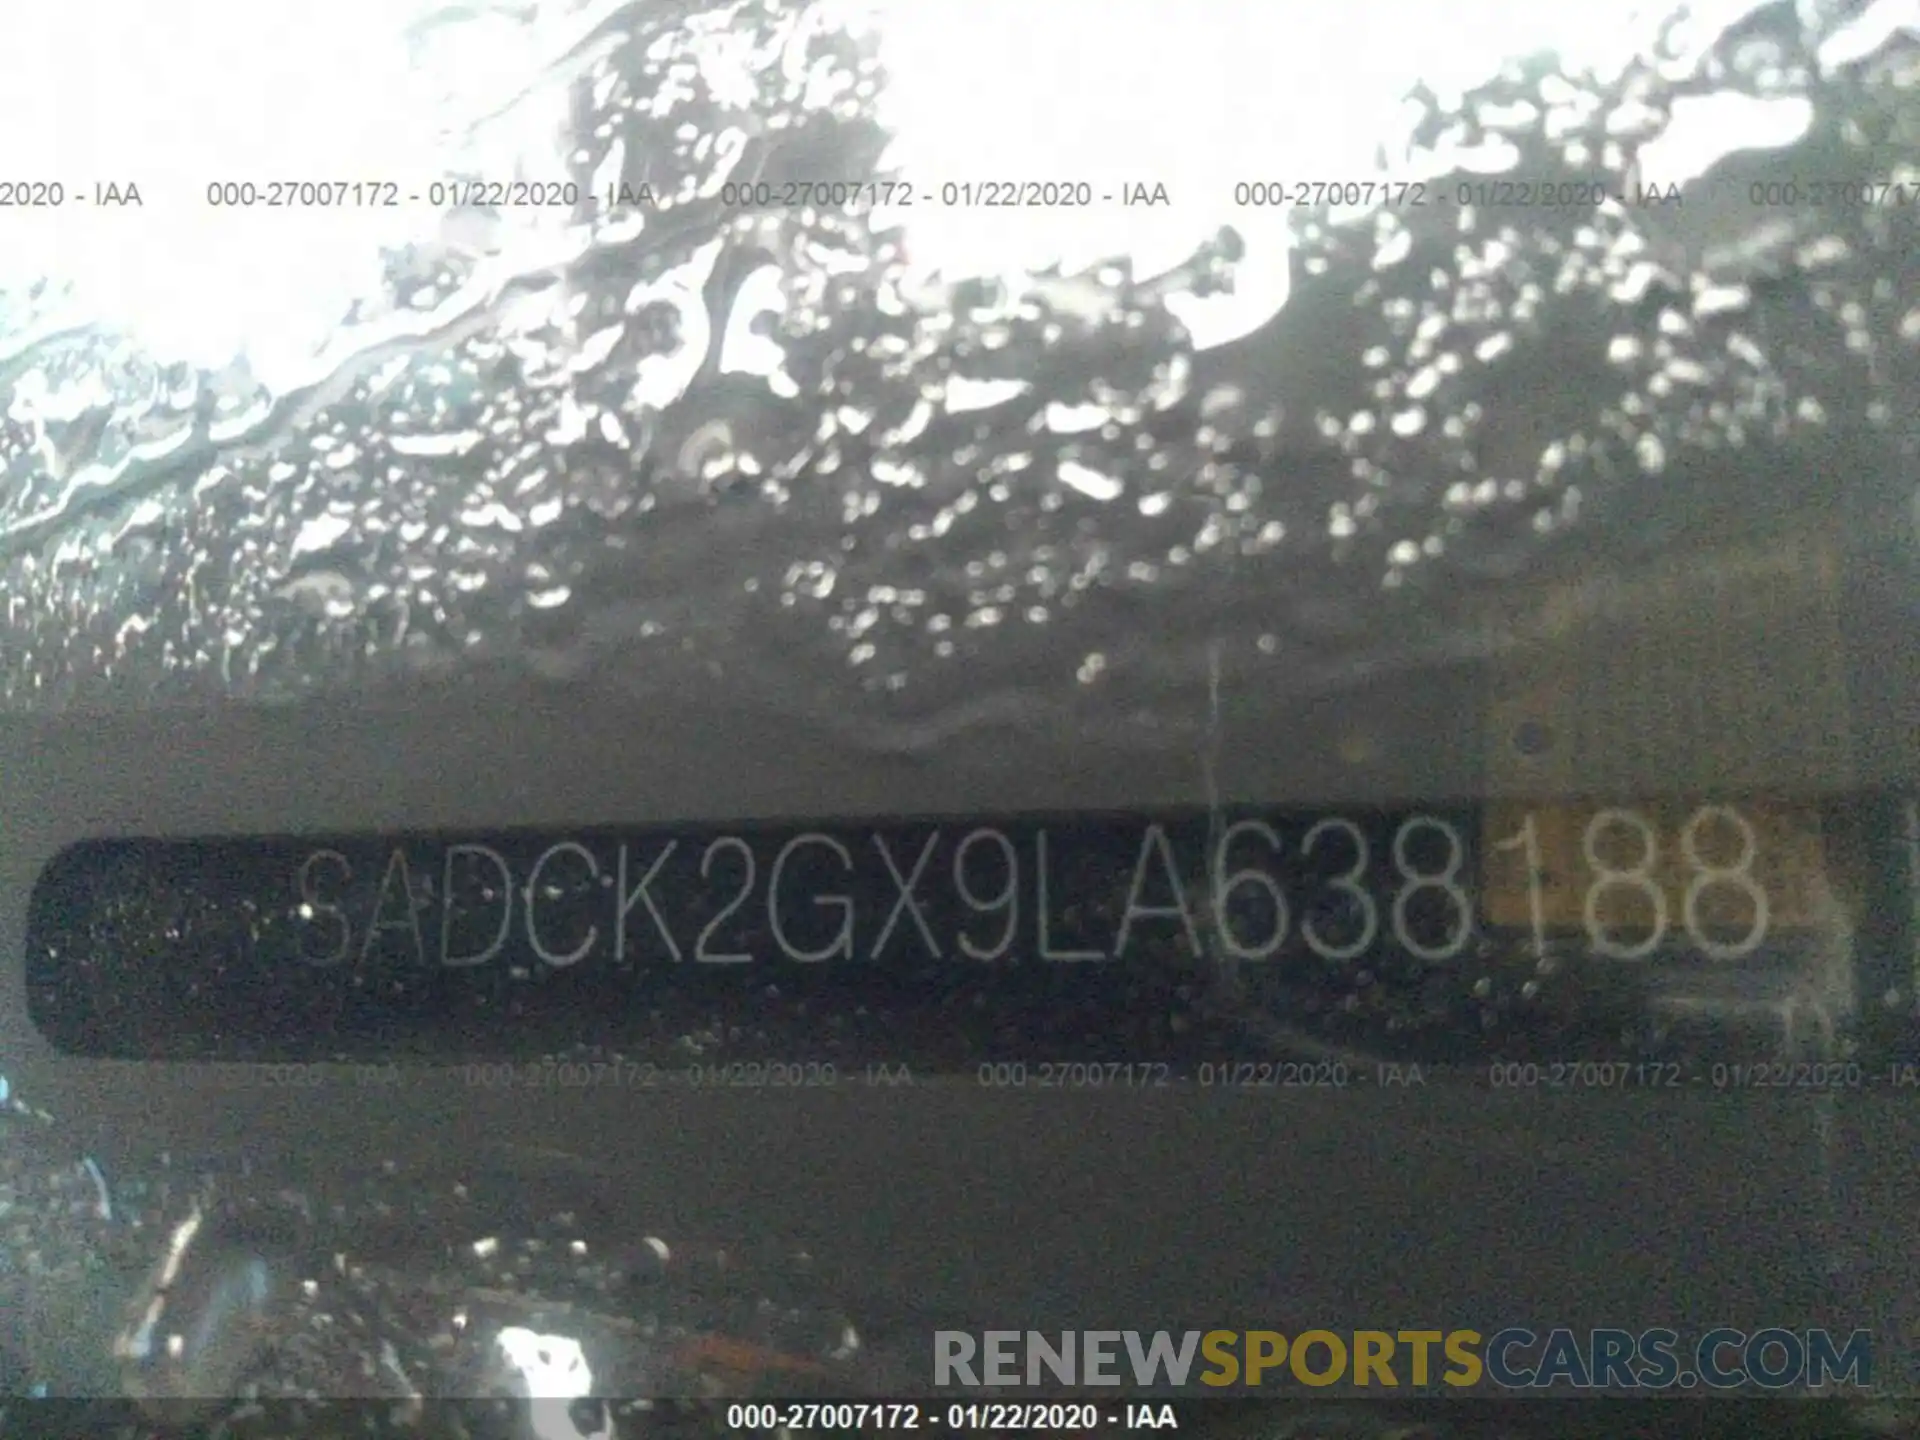 9 Photograph of a damaged car SADCK2GX9LA638188 JAGUAR F-PACE 2020